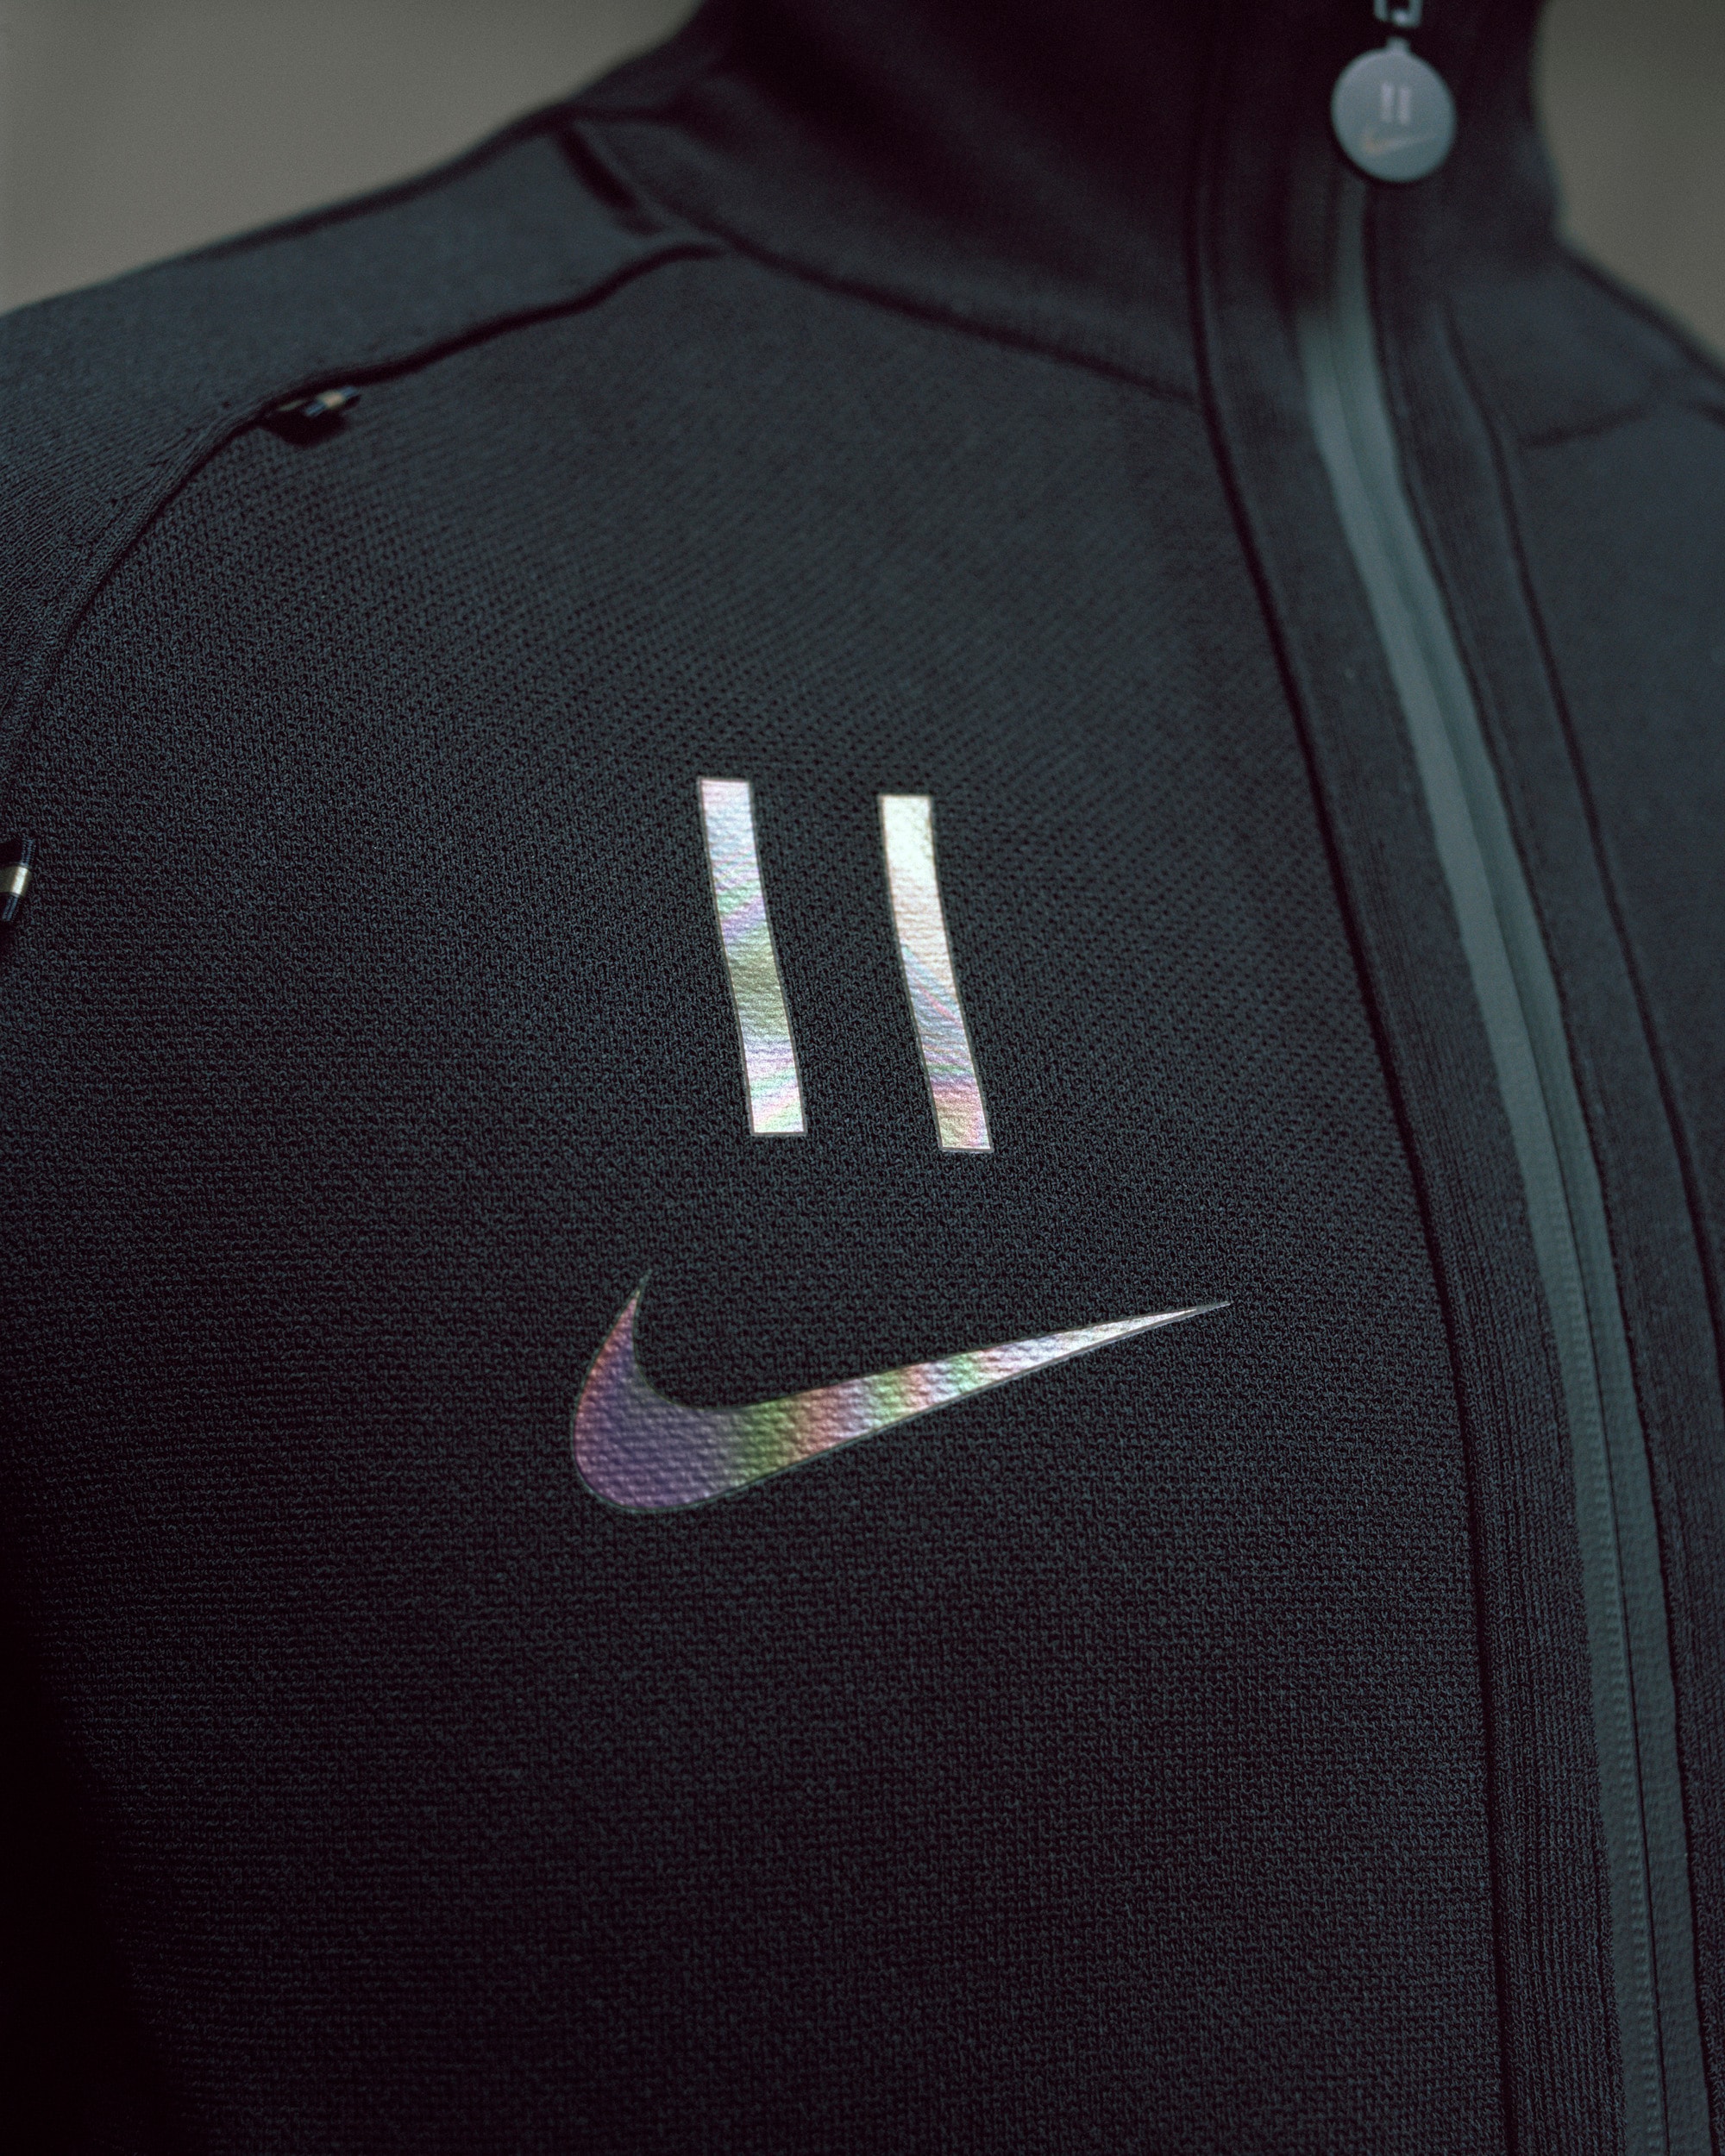 Nike x Kim Jones 聯名「Football Reimagined」系列正式發布